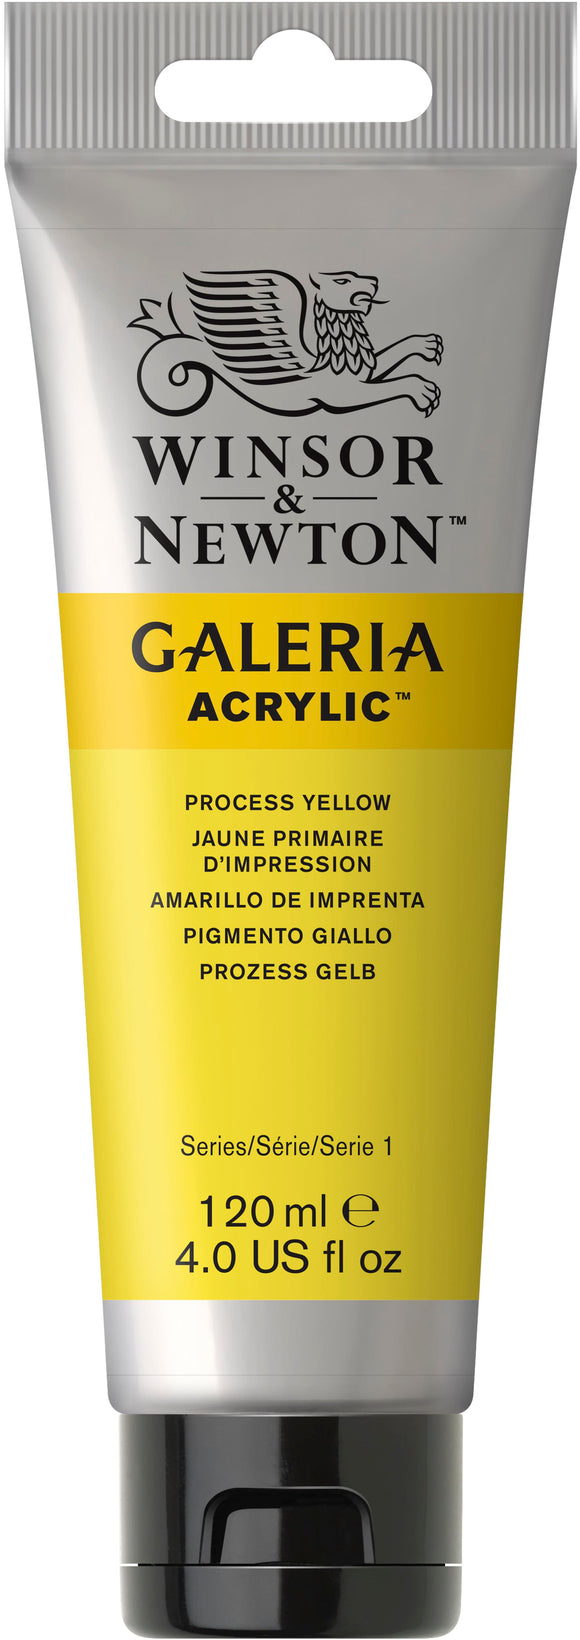 Winsor & Newton Galeria Acrylic Process Yellow 120Ml